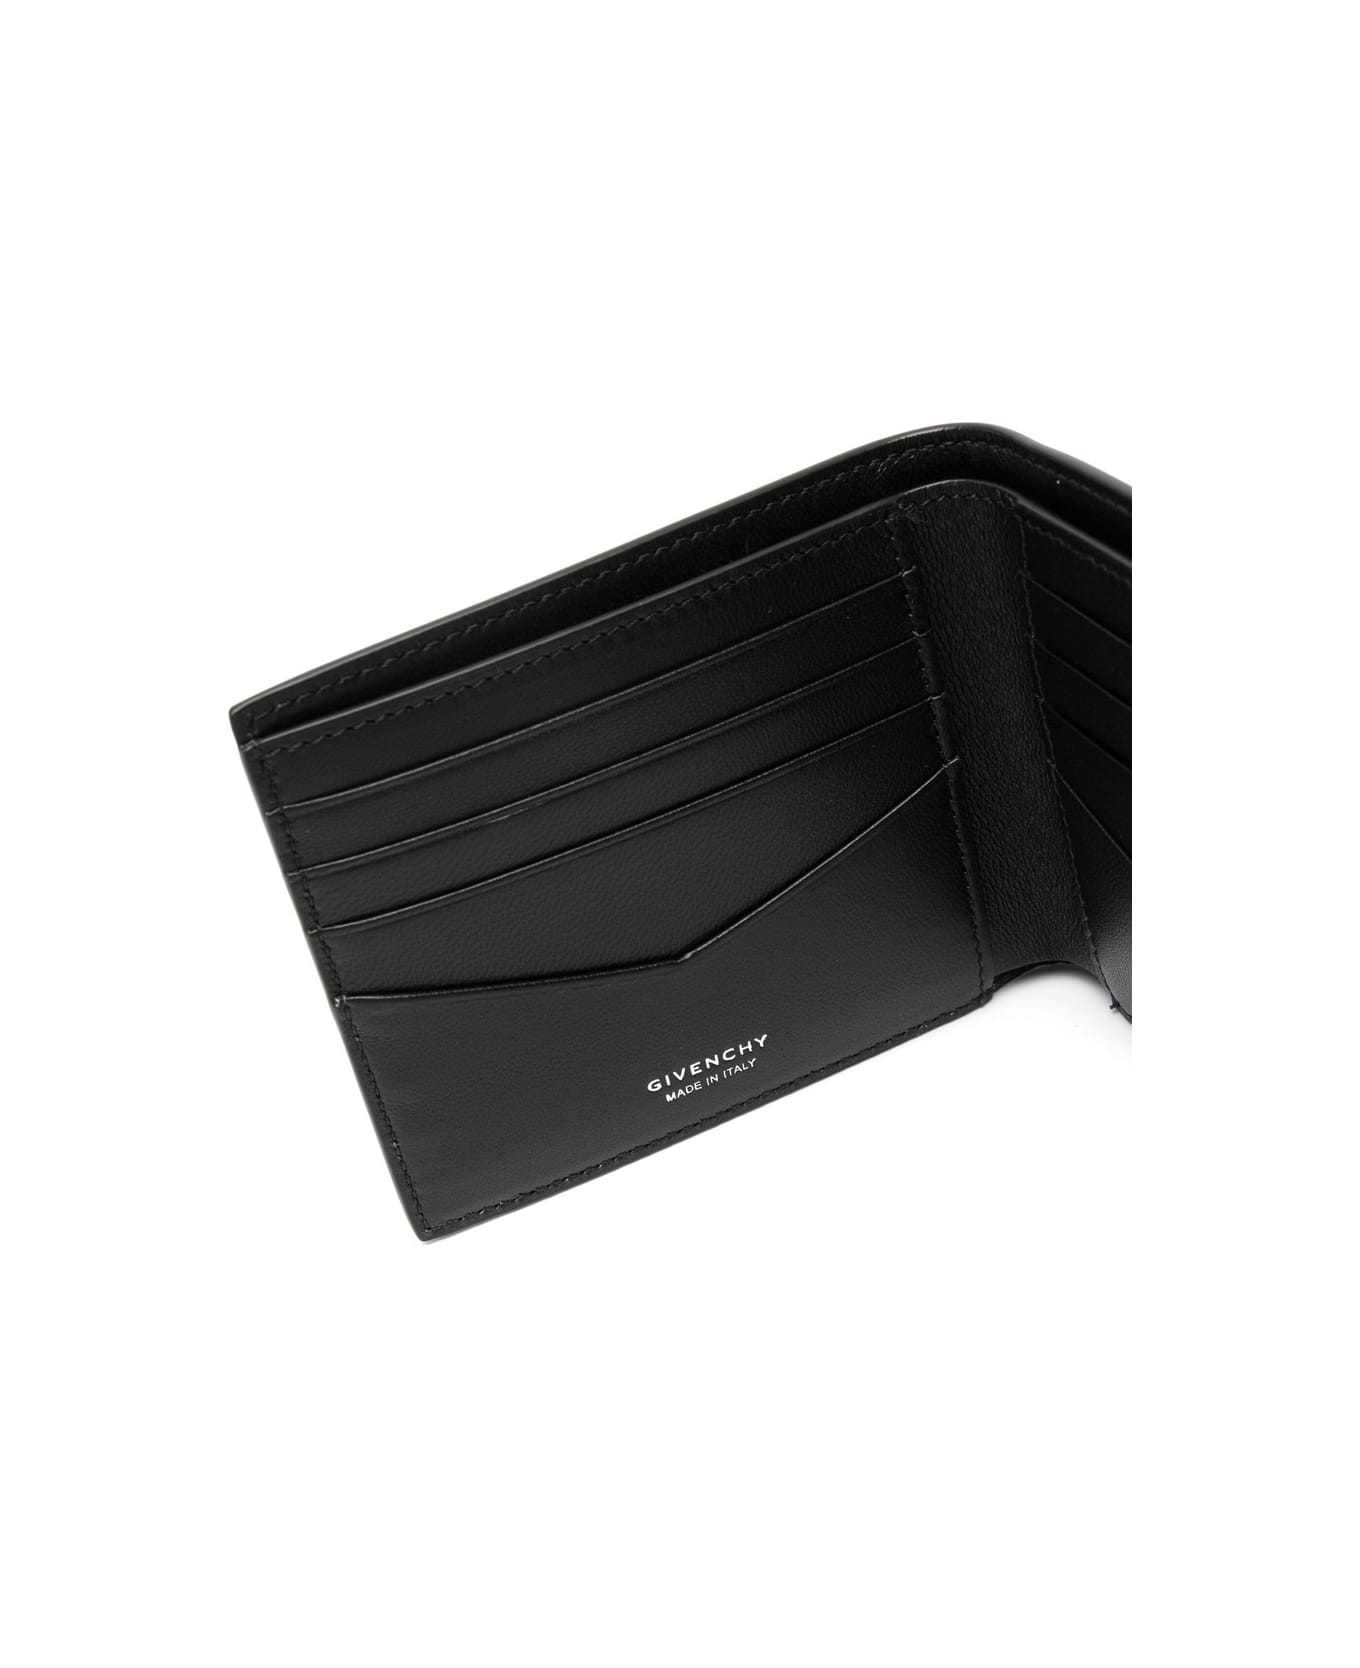 Givenchy Wallet In Black 4g Nylon - Black 財布